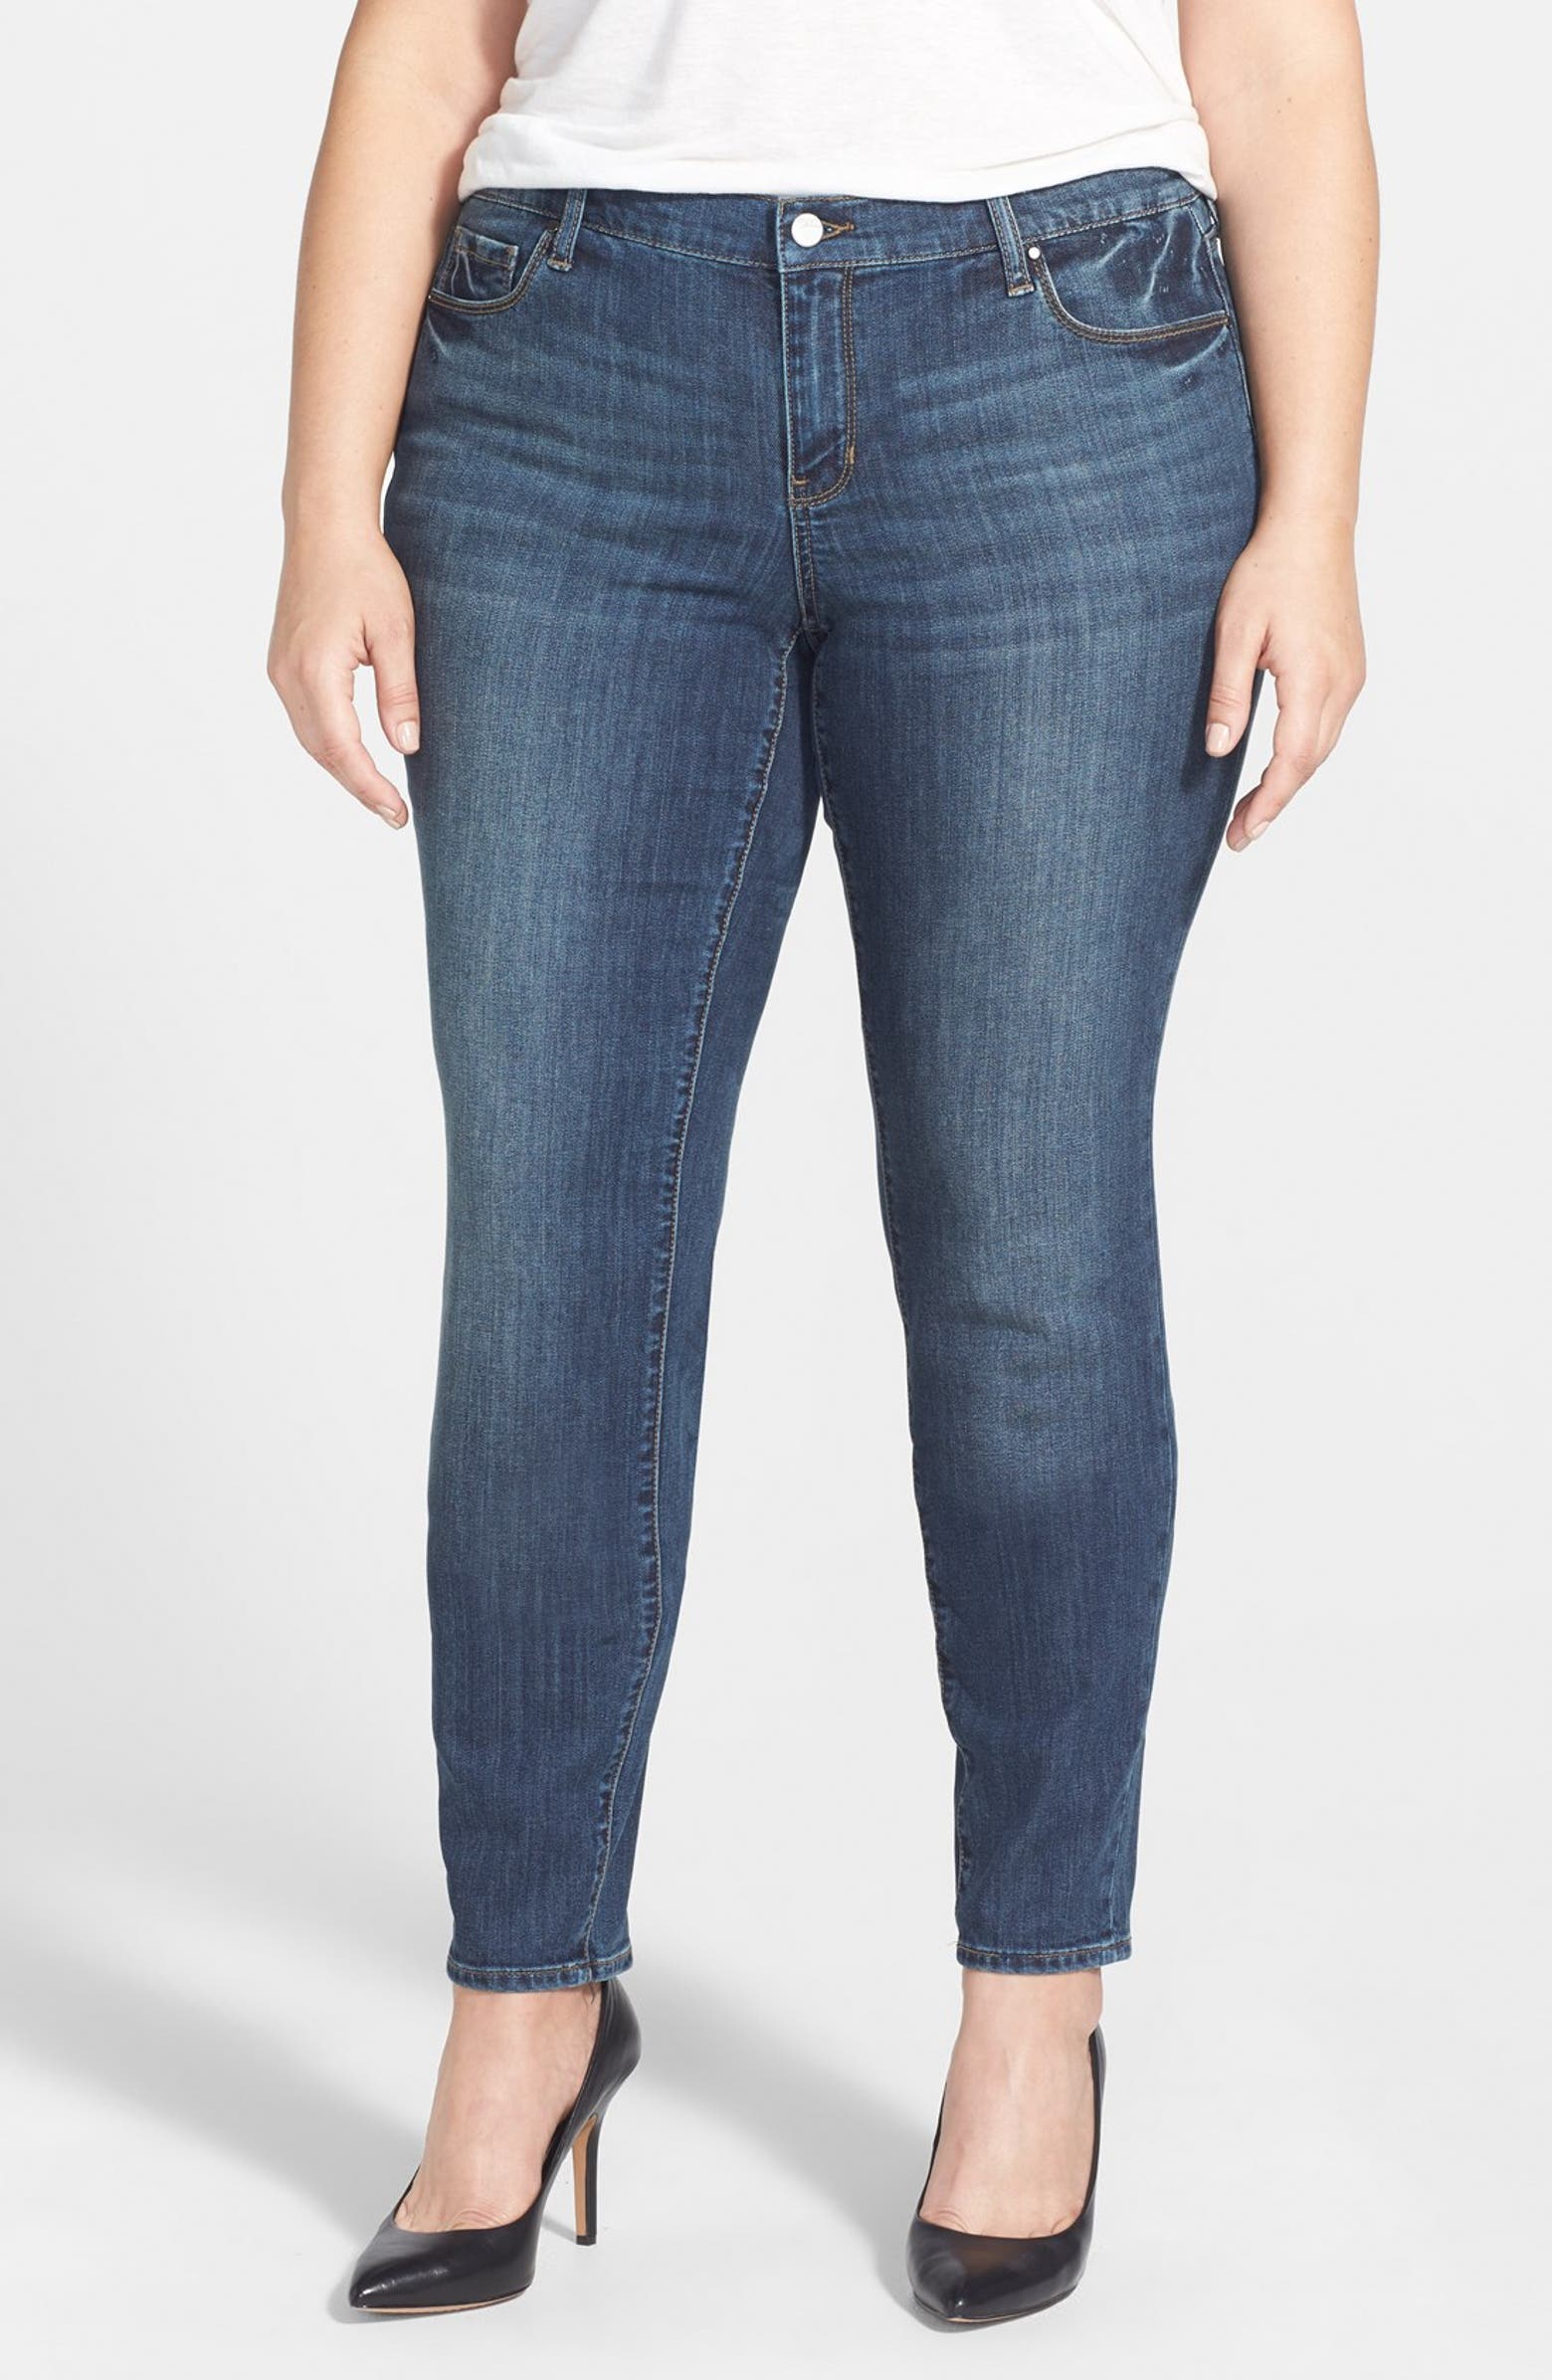 DKNY 'Soho' Stretch Skinny Jeans (Chelsea) (Plus Size) | Nordstrom